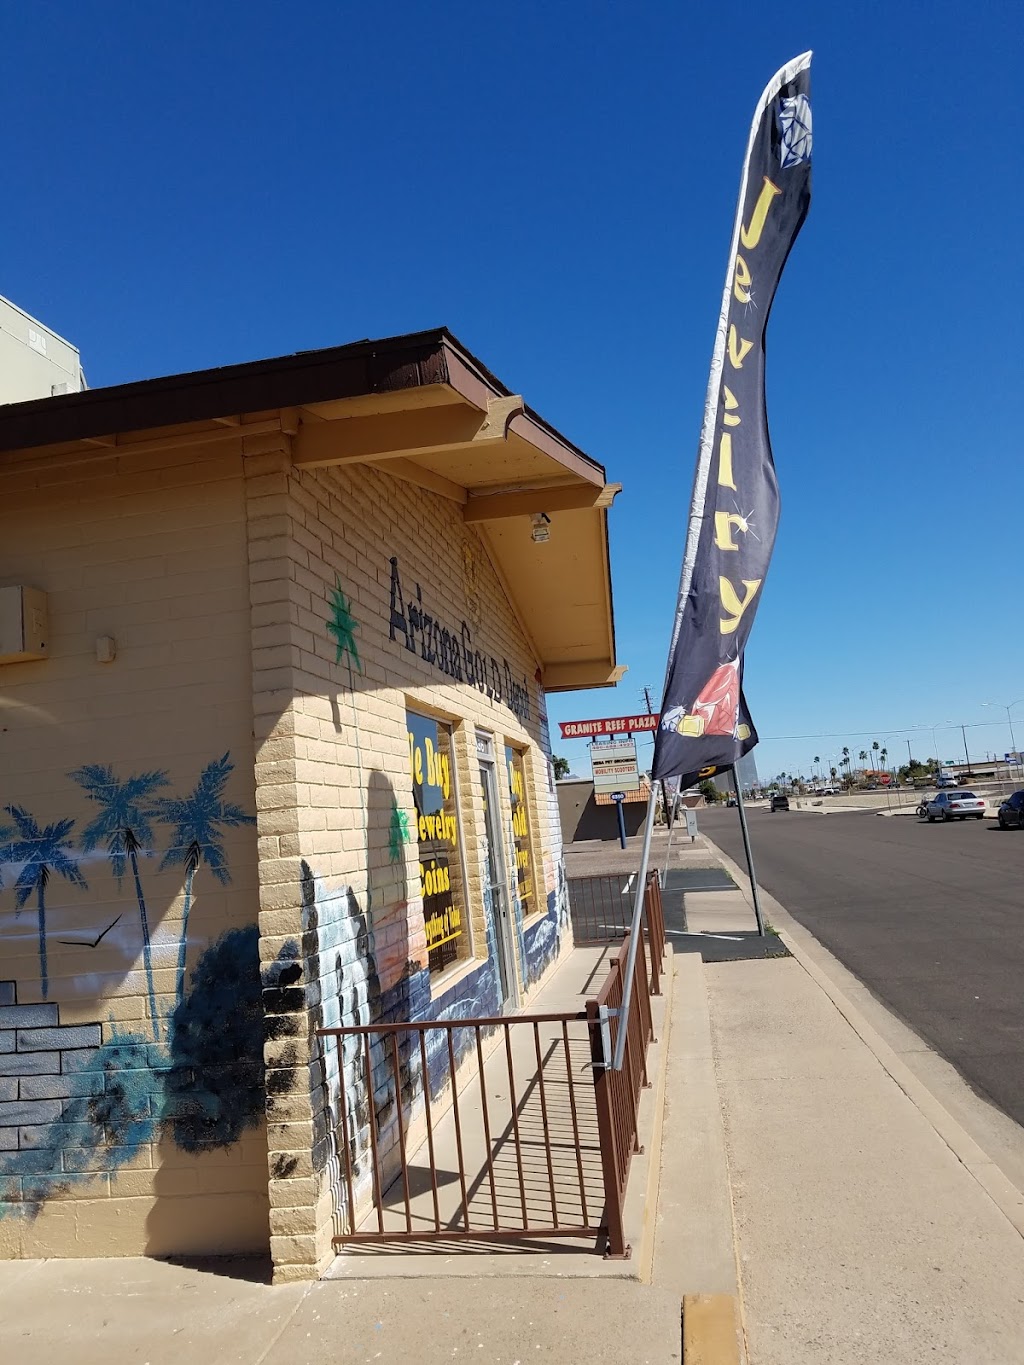 Arizona Gold Depot | 6336 E Main St, Mesa, AZ 85205 | Phone: (602) 576-1957